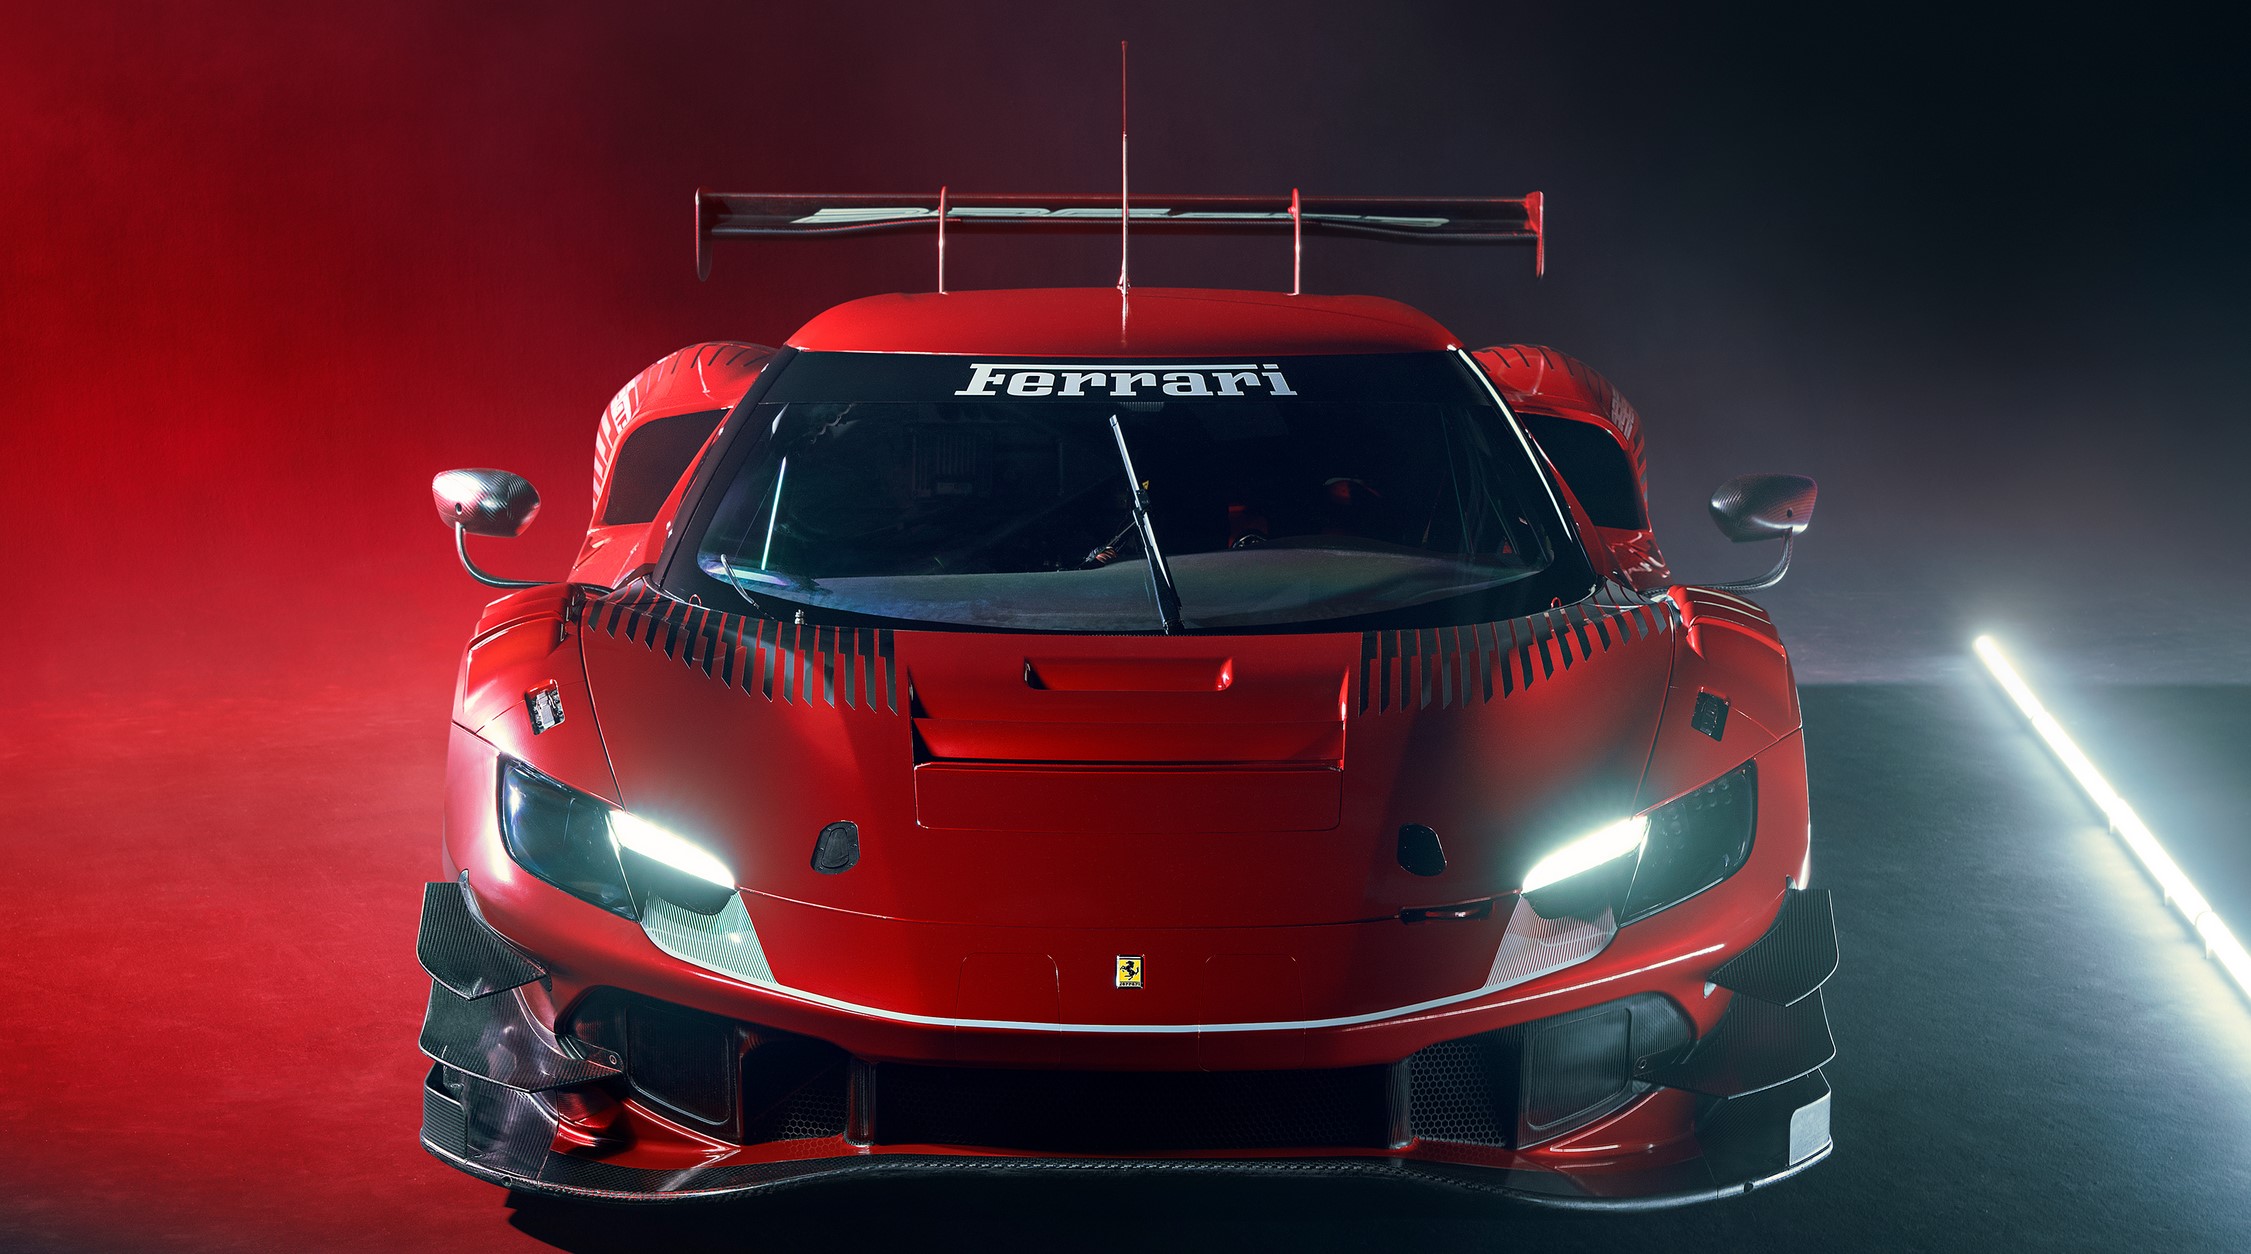 aria-label="Ferrari 296 GT3 racing car 2"